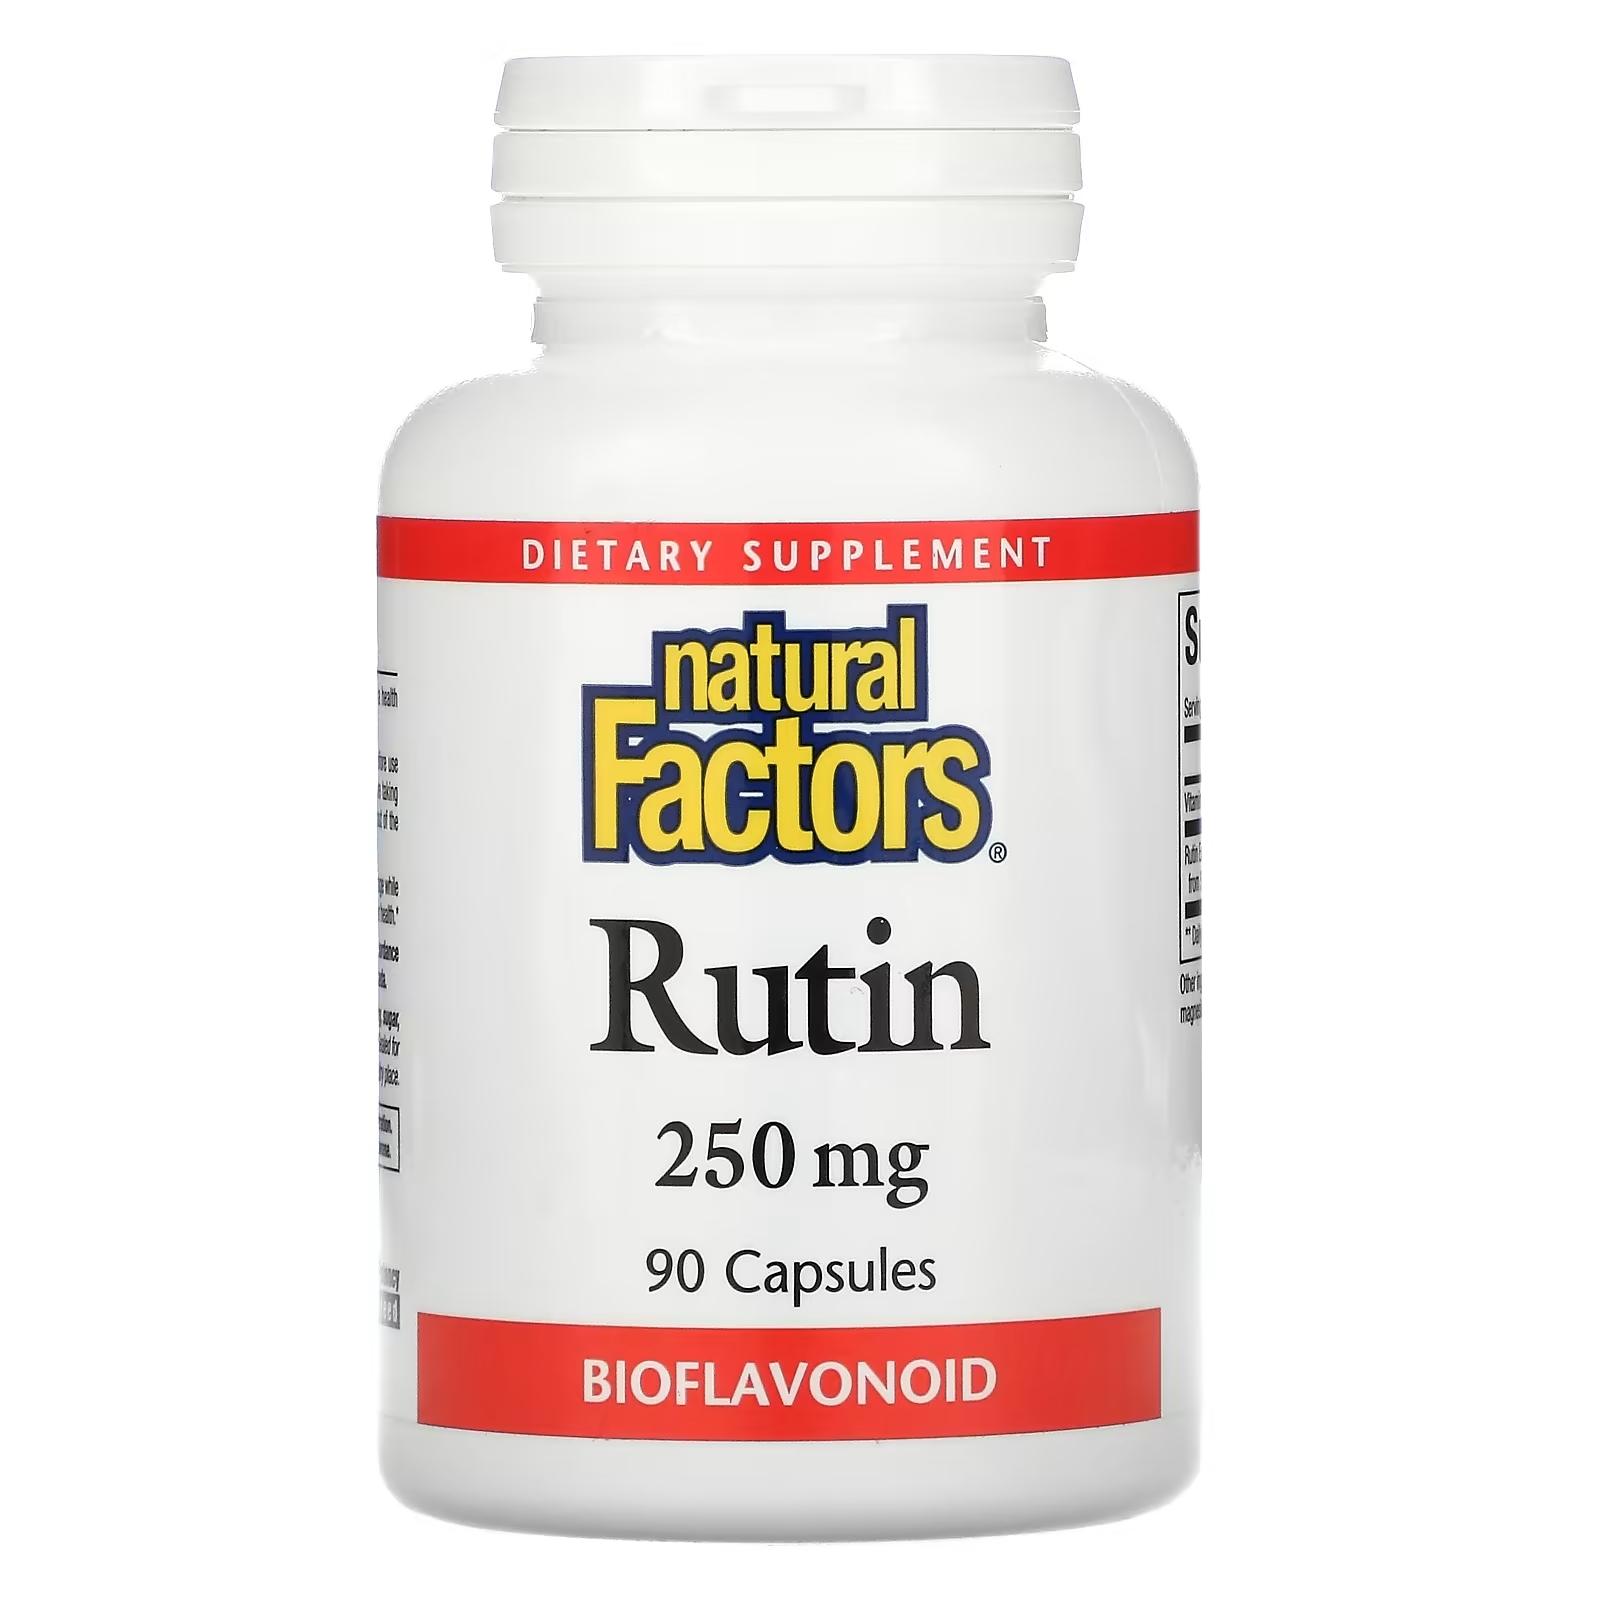 Natural Factors рутин 250 мг, 90 капсул eye factors с 2 мг лютеина 90 капсул natural factors